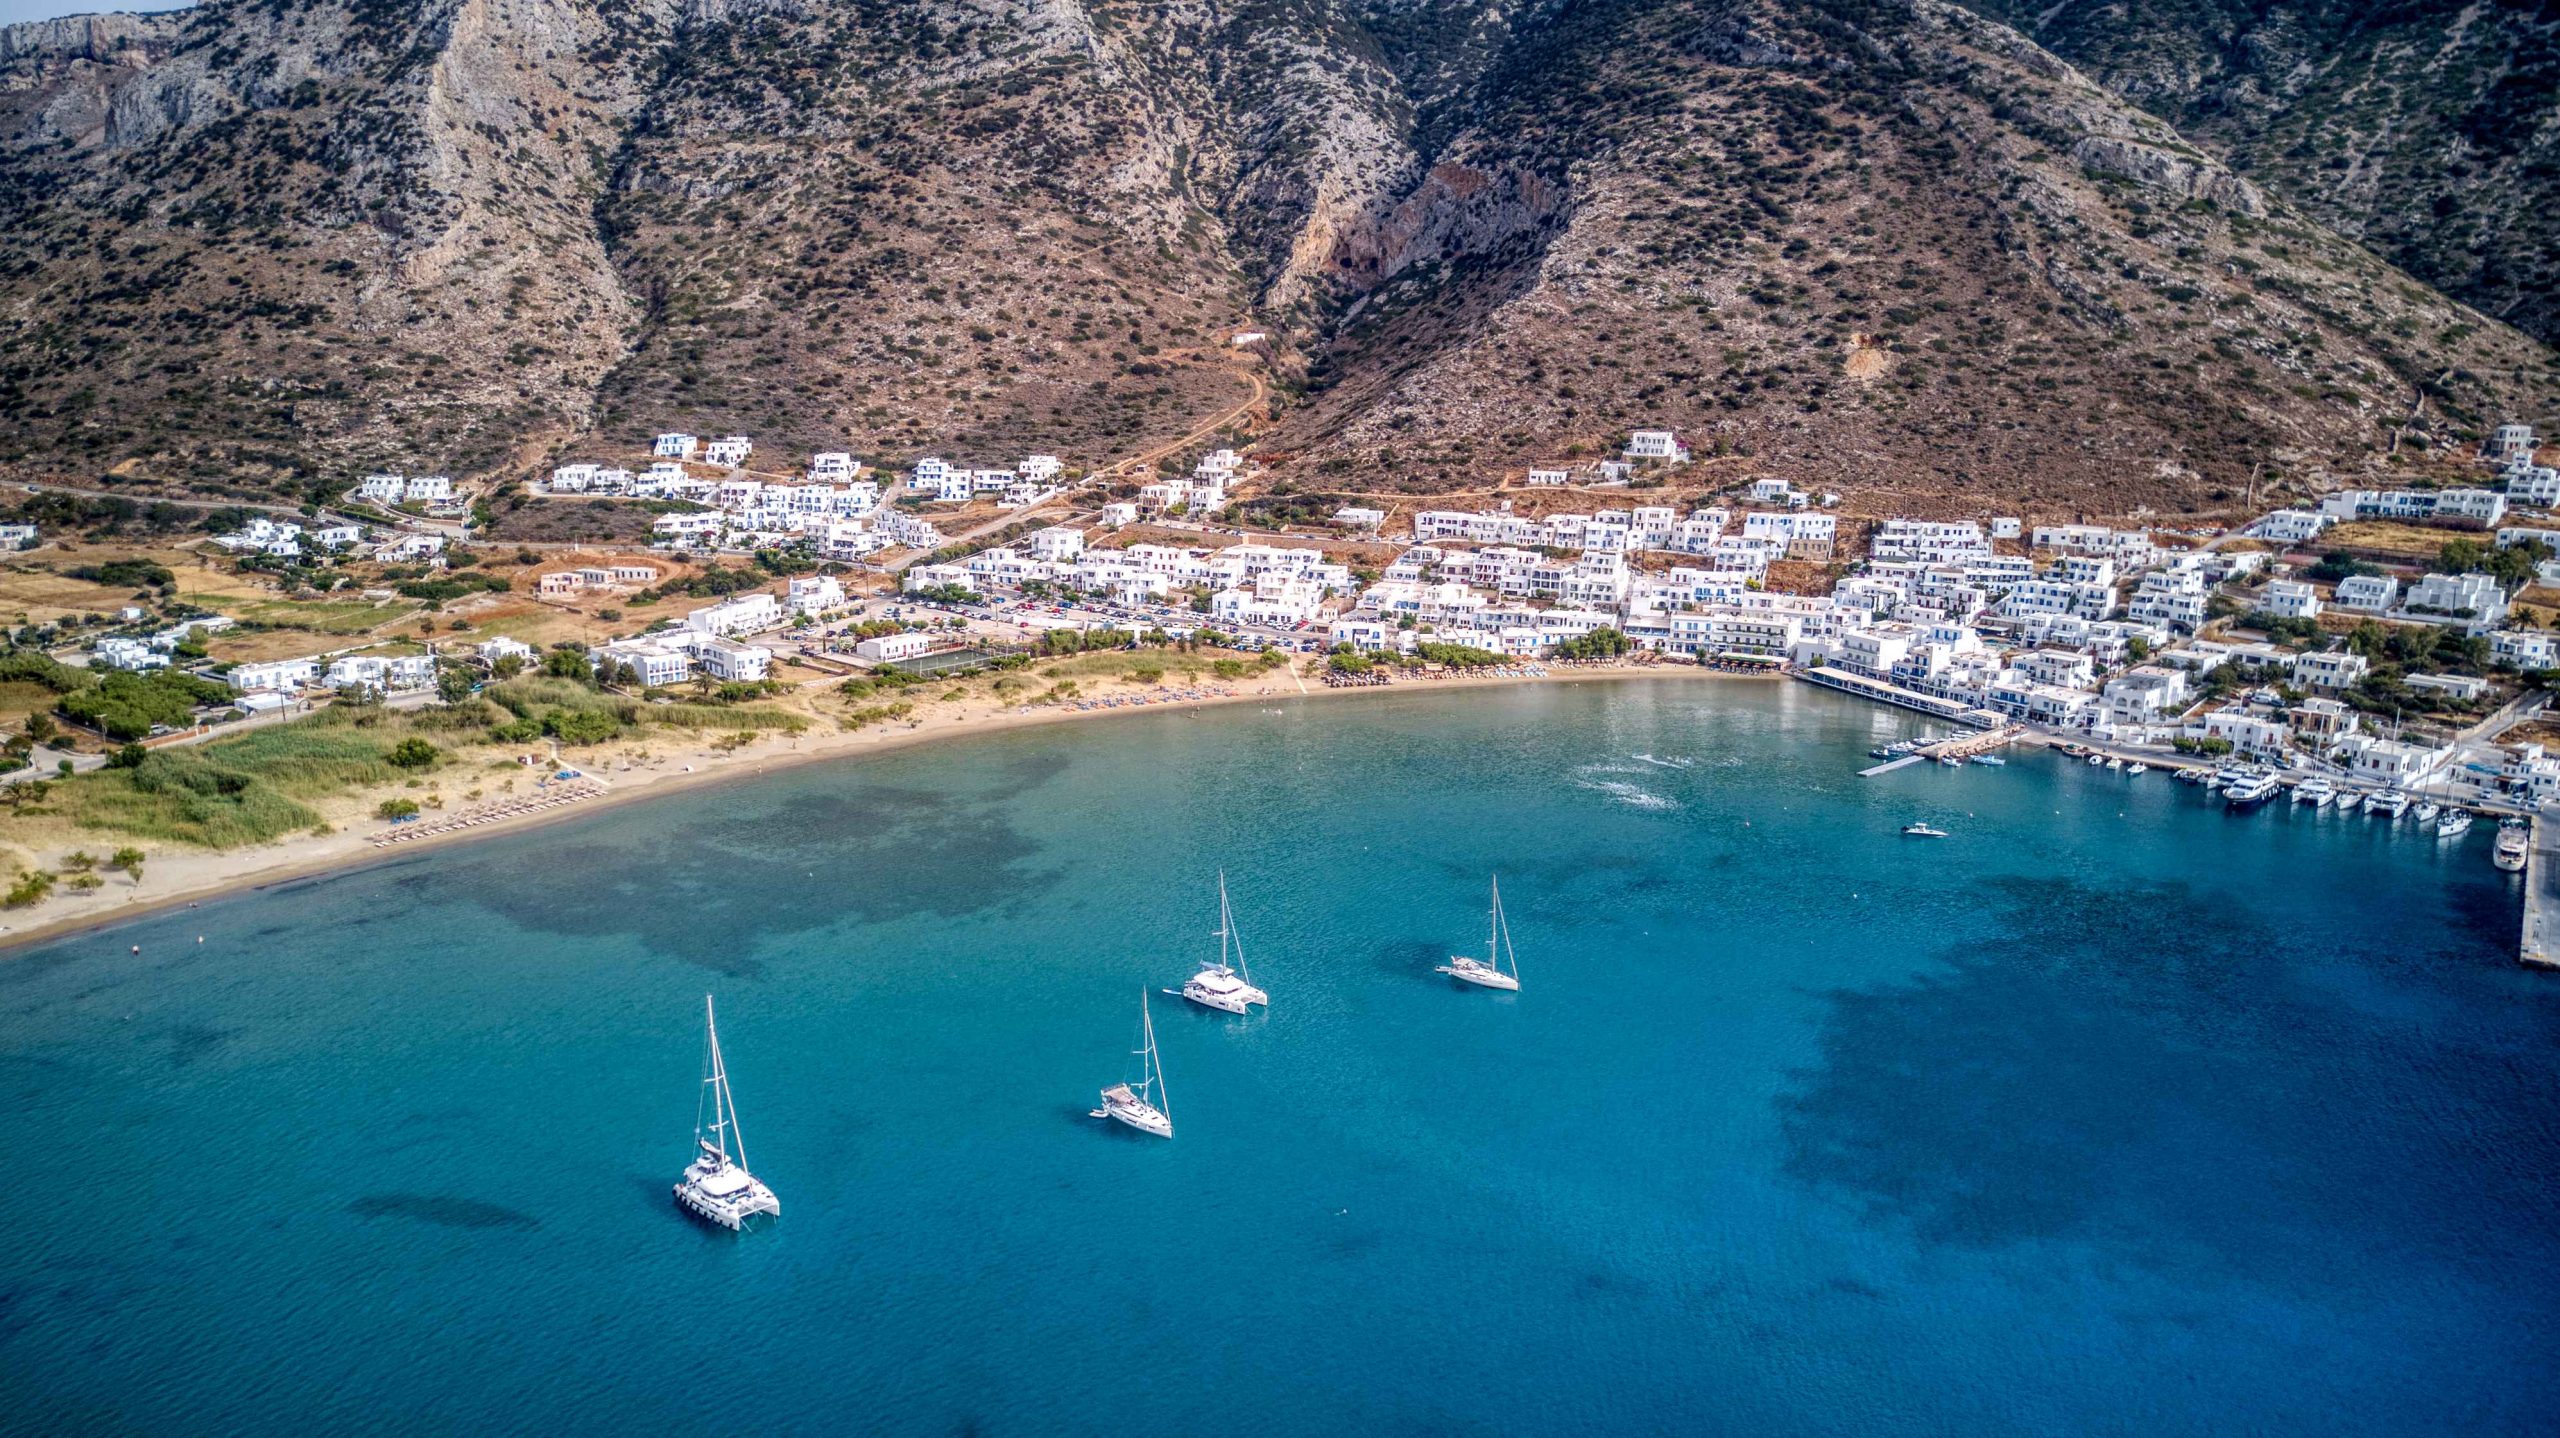 UK Magazine Sings Praises of ‘Magical’ Greeks Islands